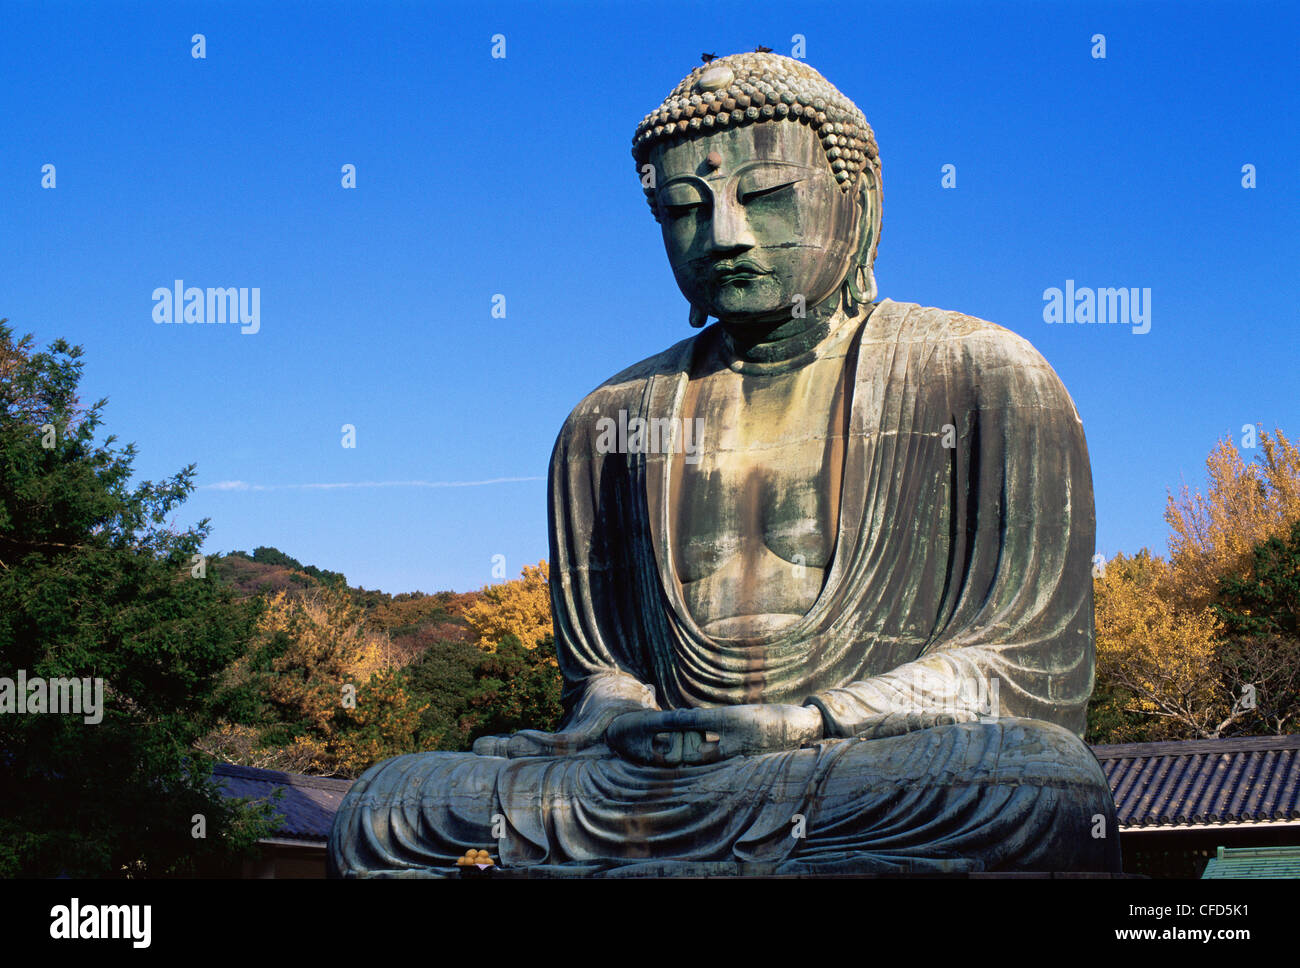 Japan, Tokyo, Kamakura, Daibutsu, The Great Buddha with Autumn Leaves Stock Photo